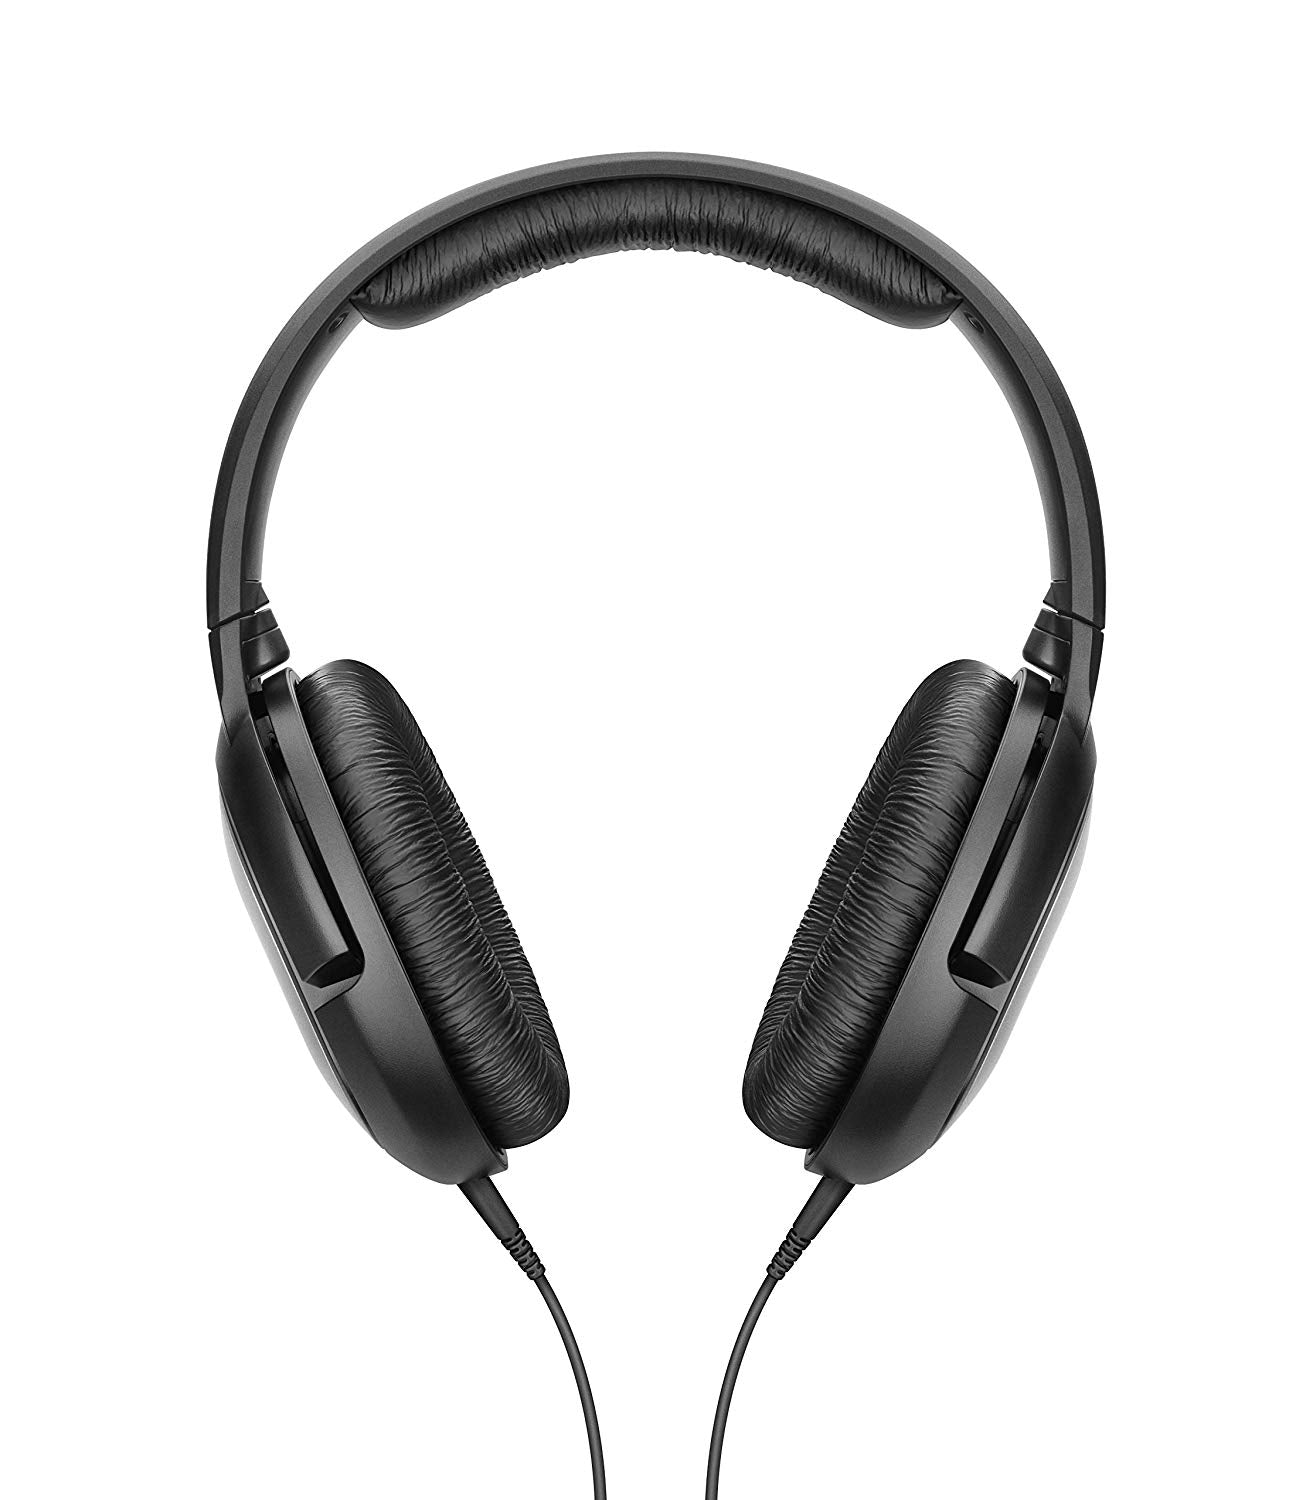 Sennheiser HD 206 Over-ear Headband HiFi Headphone Stereo Headset